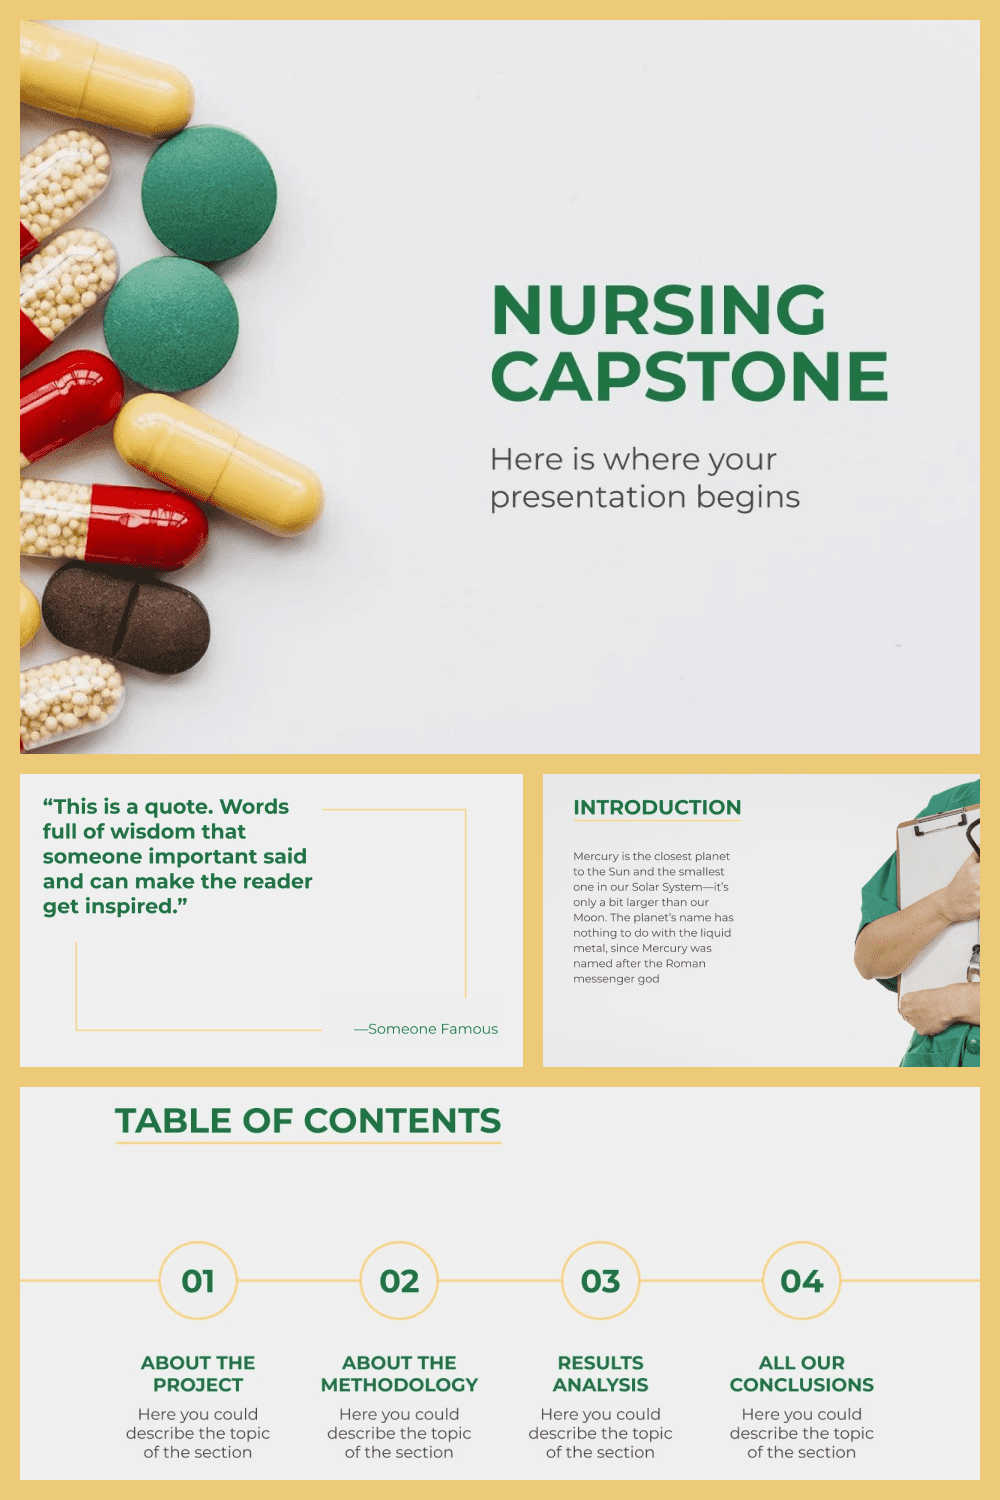 Nursing capstone.